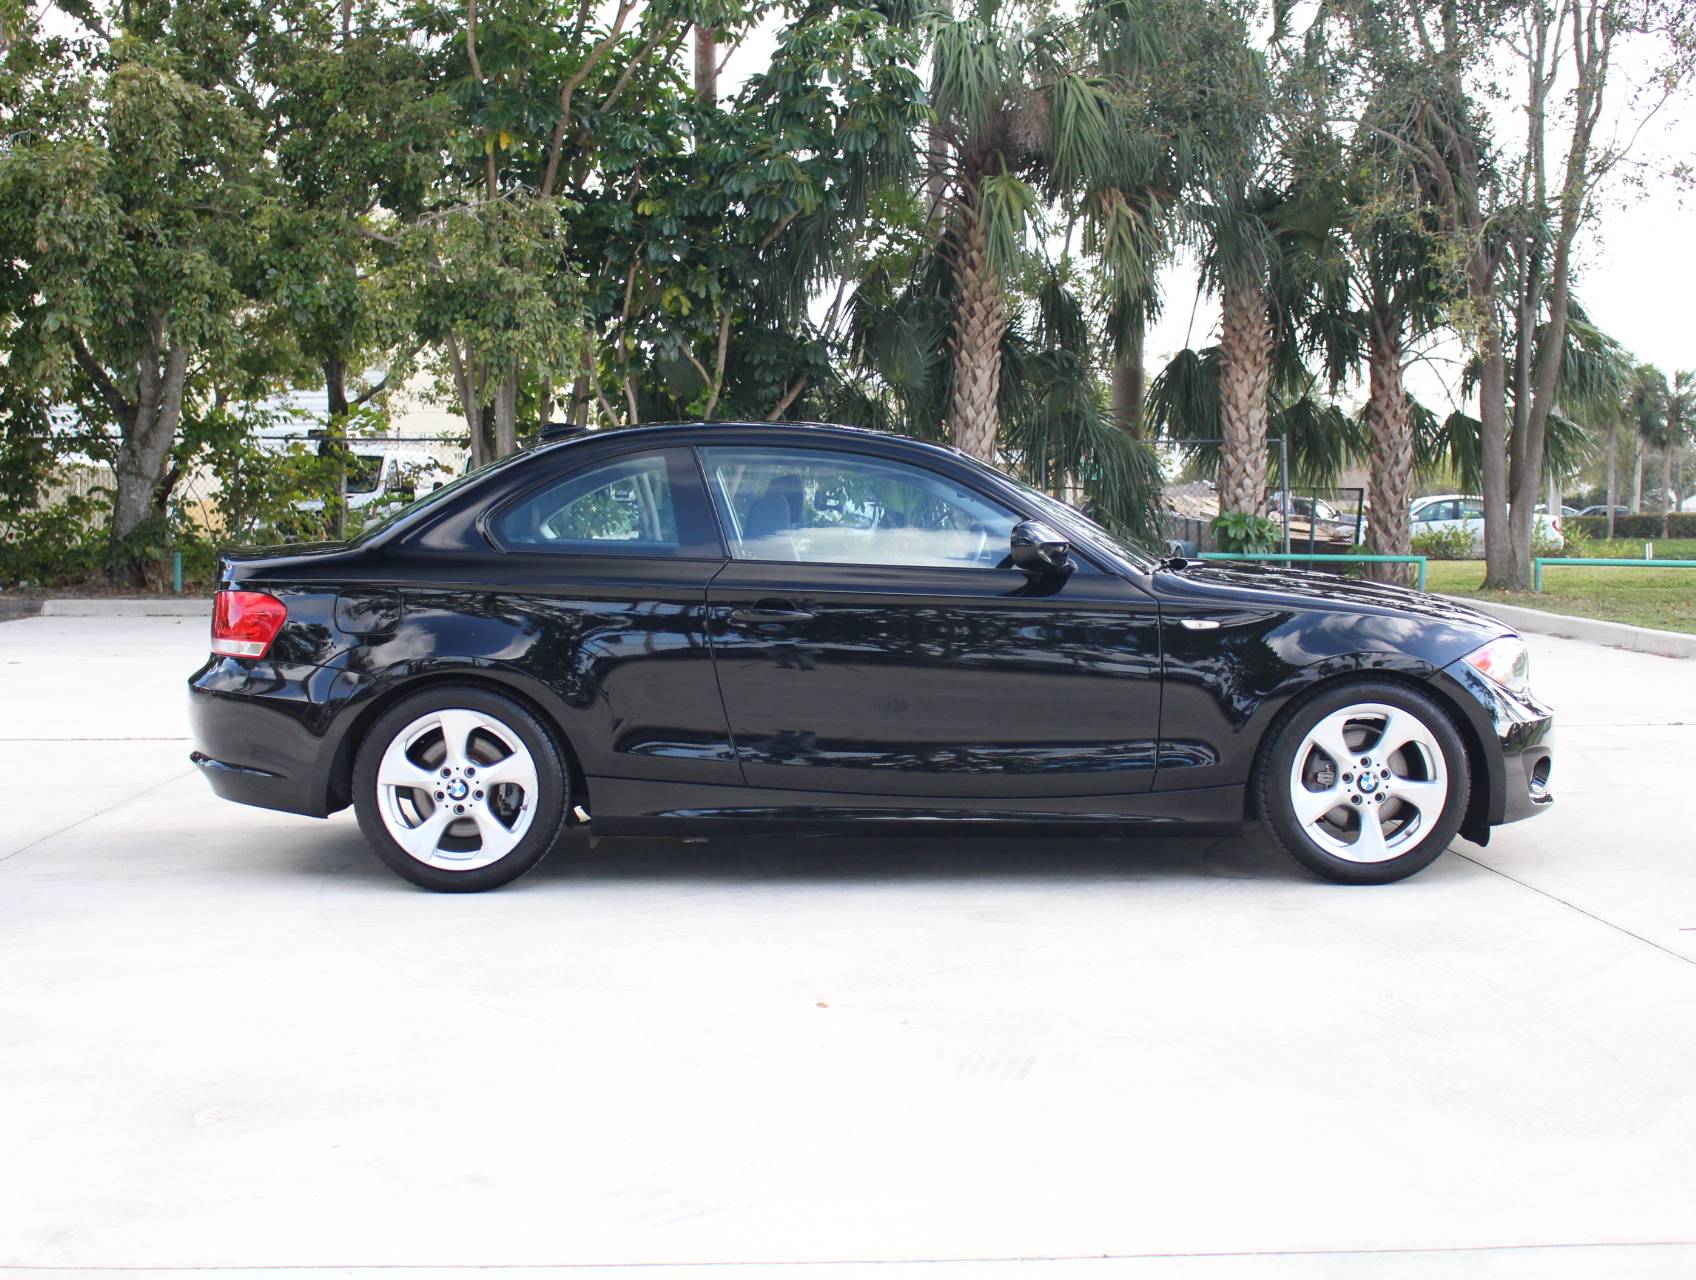 Florida Fine Cars - Used BMW 1 SERIES 2012 MARGATE 128I